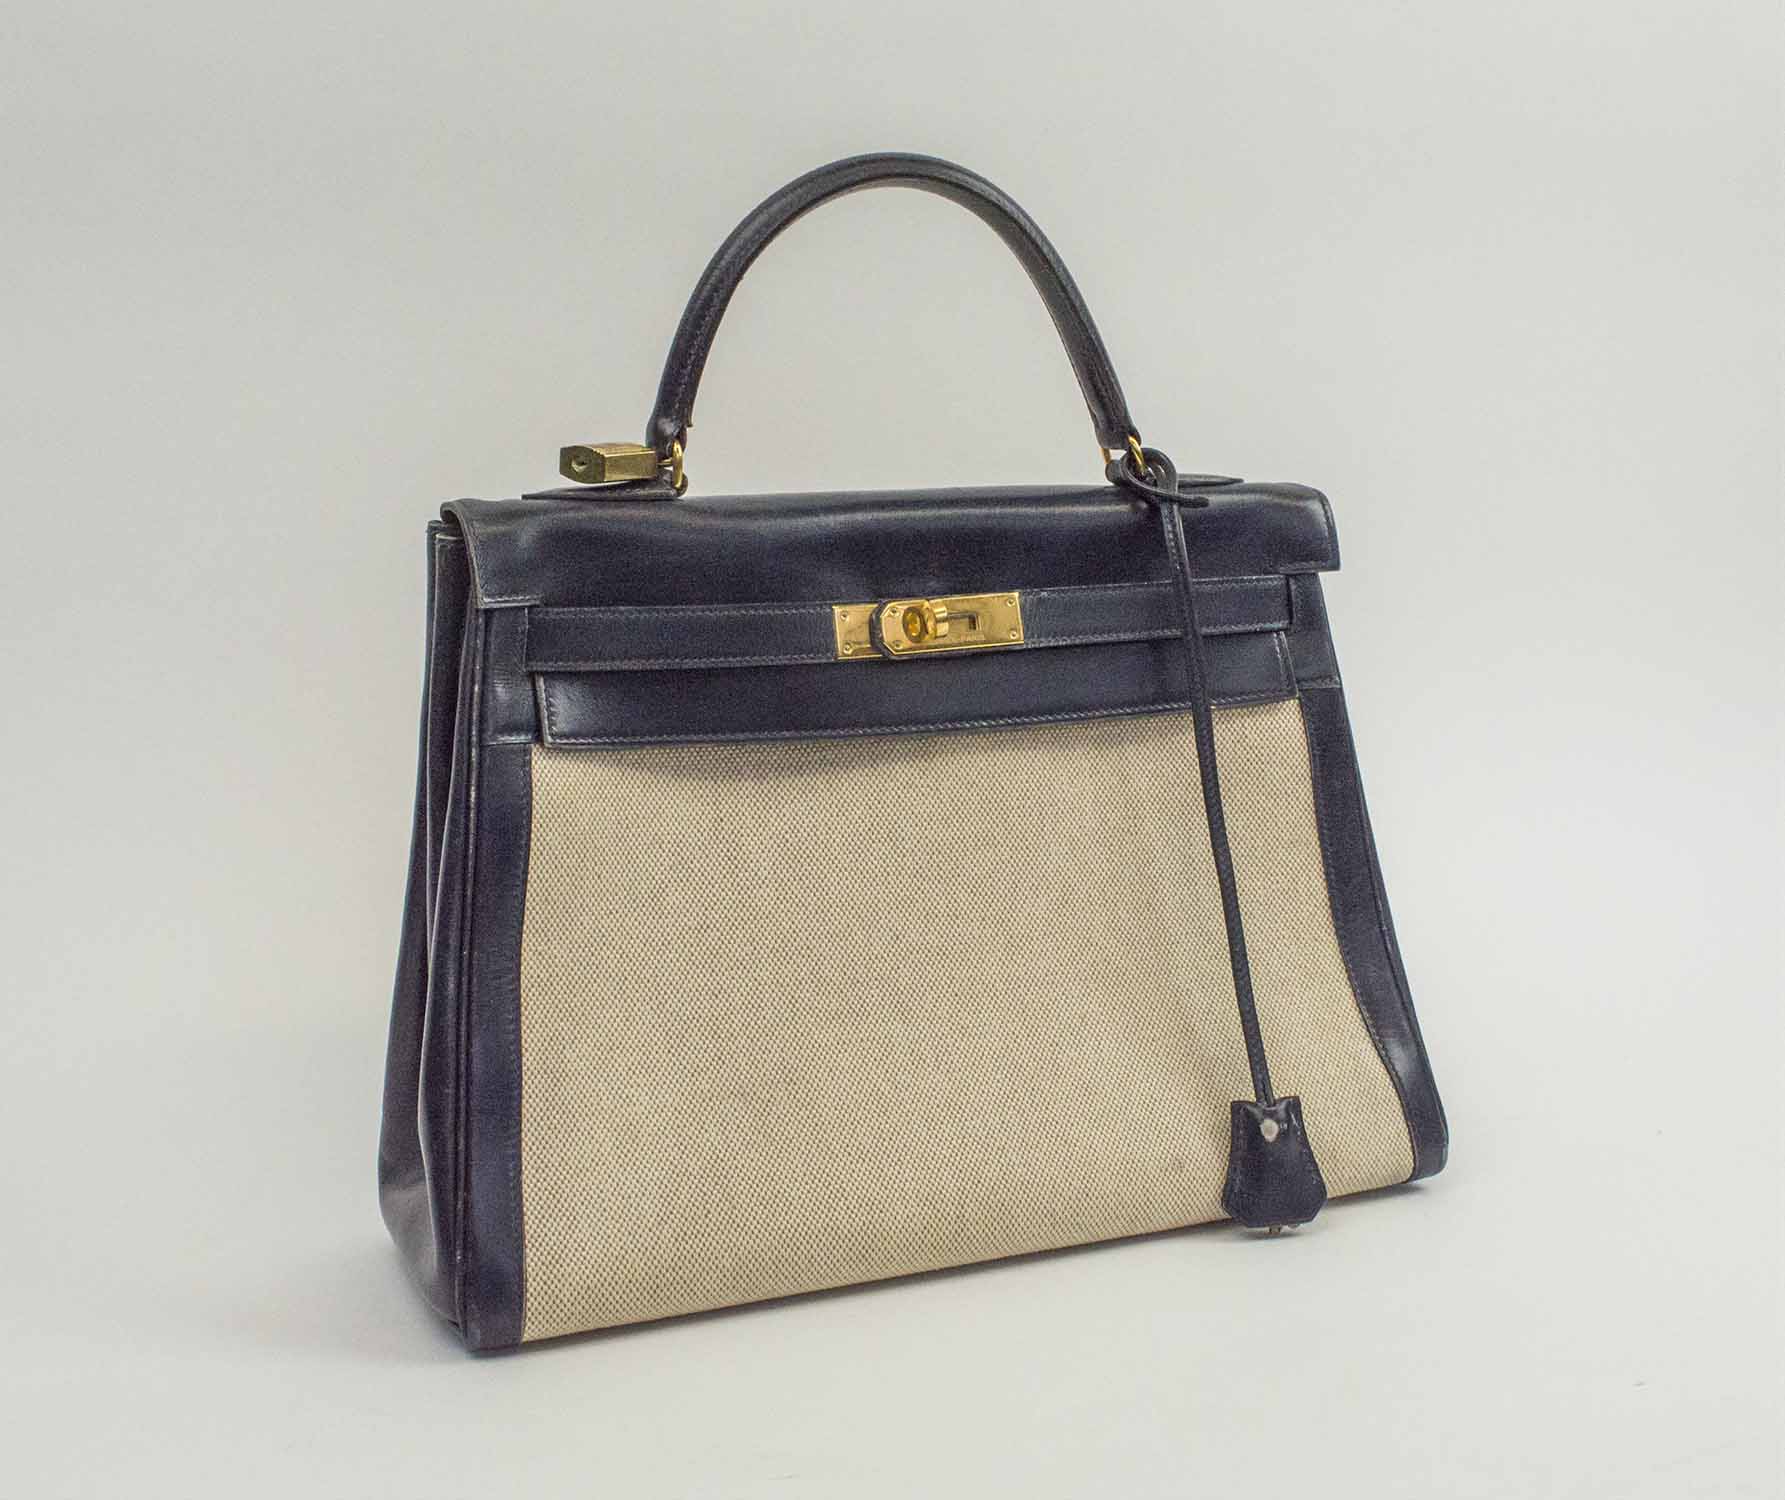 Lot - Vintage Hermes Kelly 28 Black Leather Handbag